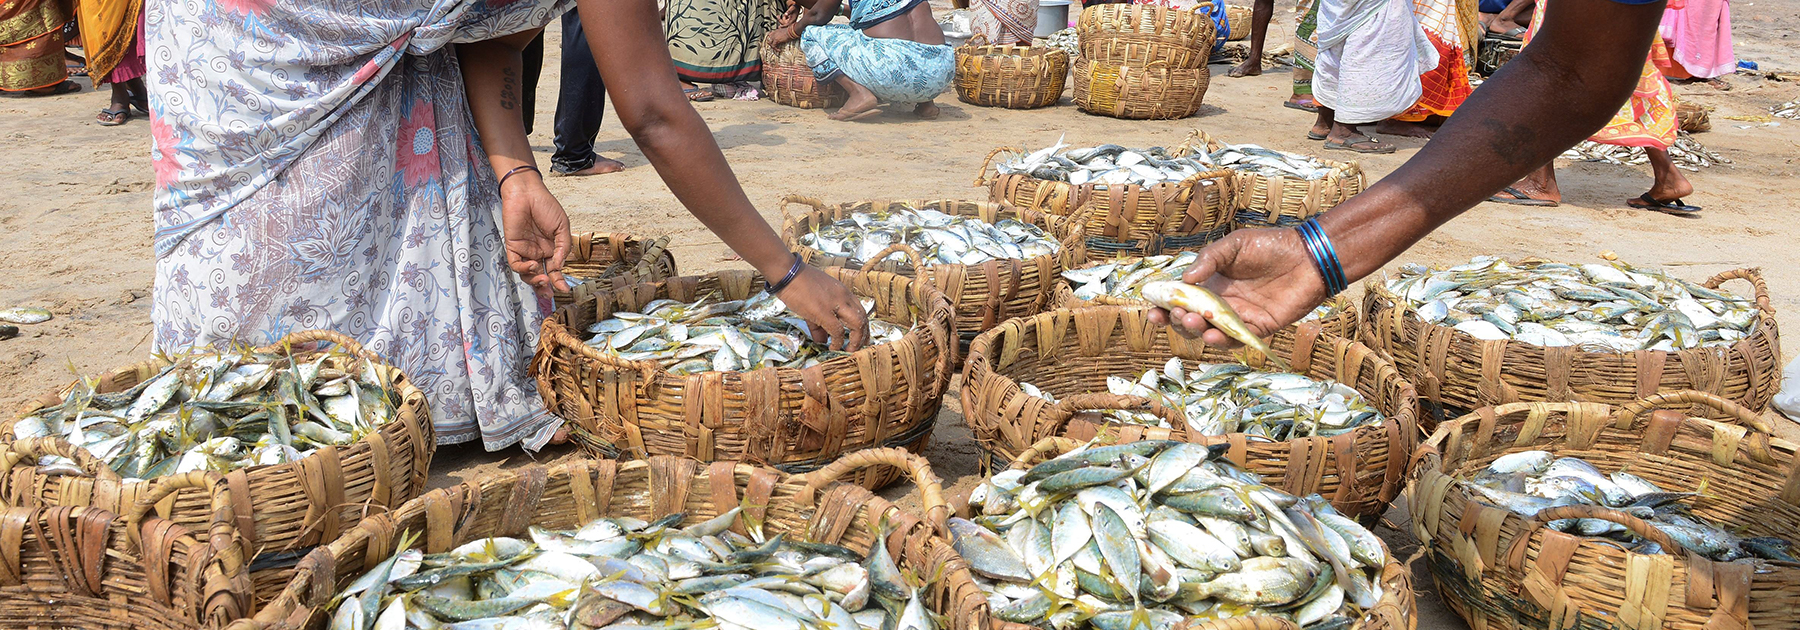 Fisherwomen sort through a catch of fish on a beach. (NOAH SEELAM/AFP/Getty Images)